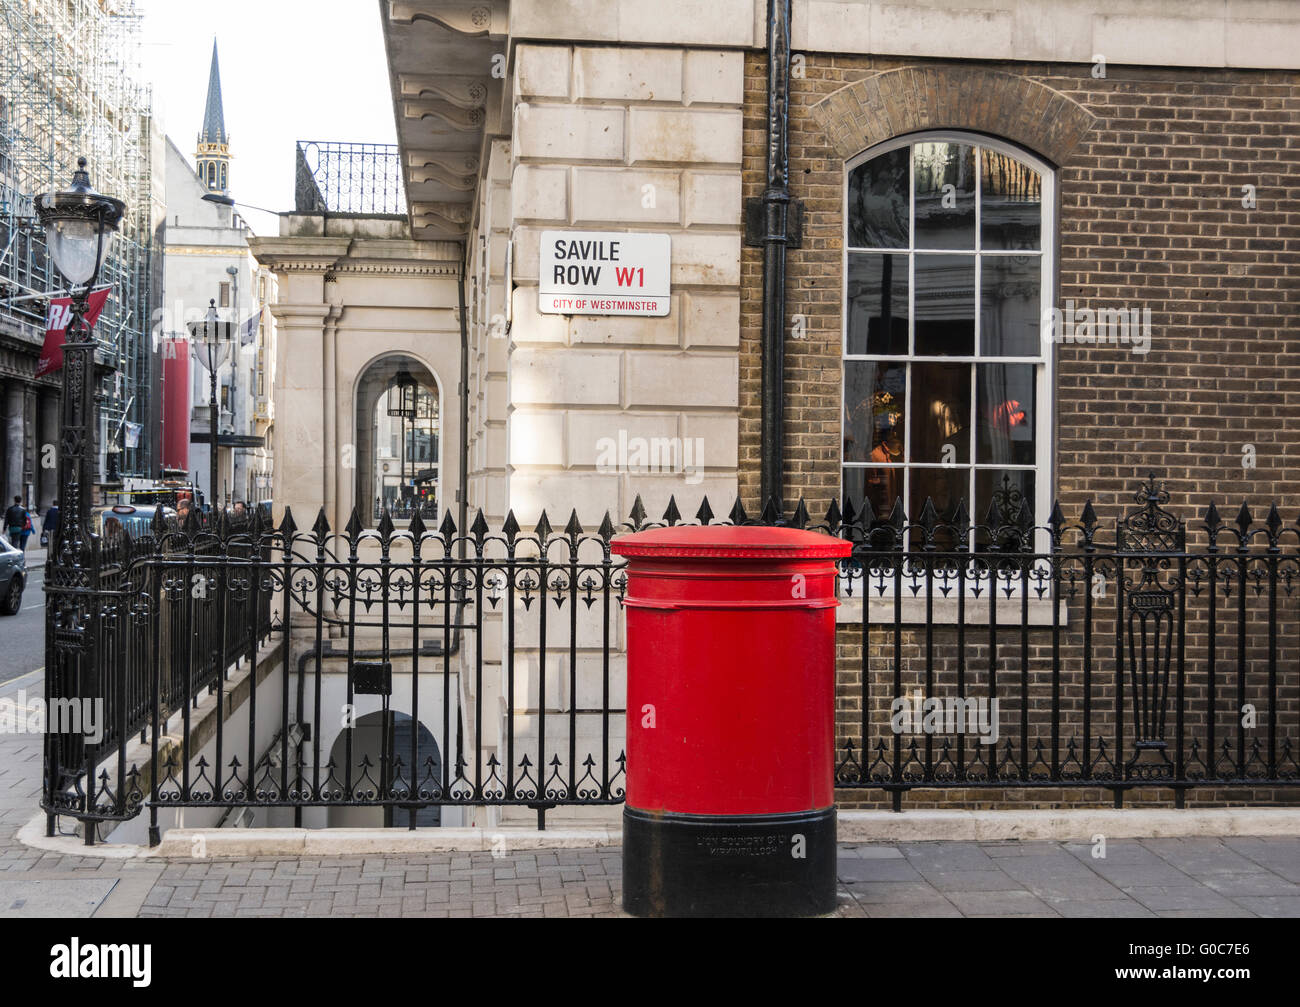 Savile Row street sign, City of Westminster, London, W1, England, UK Stock Photo